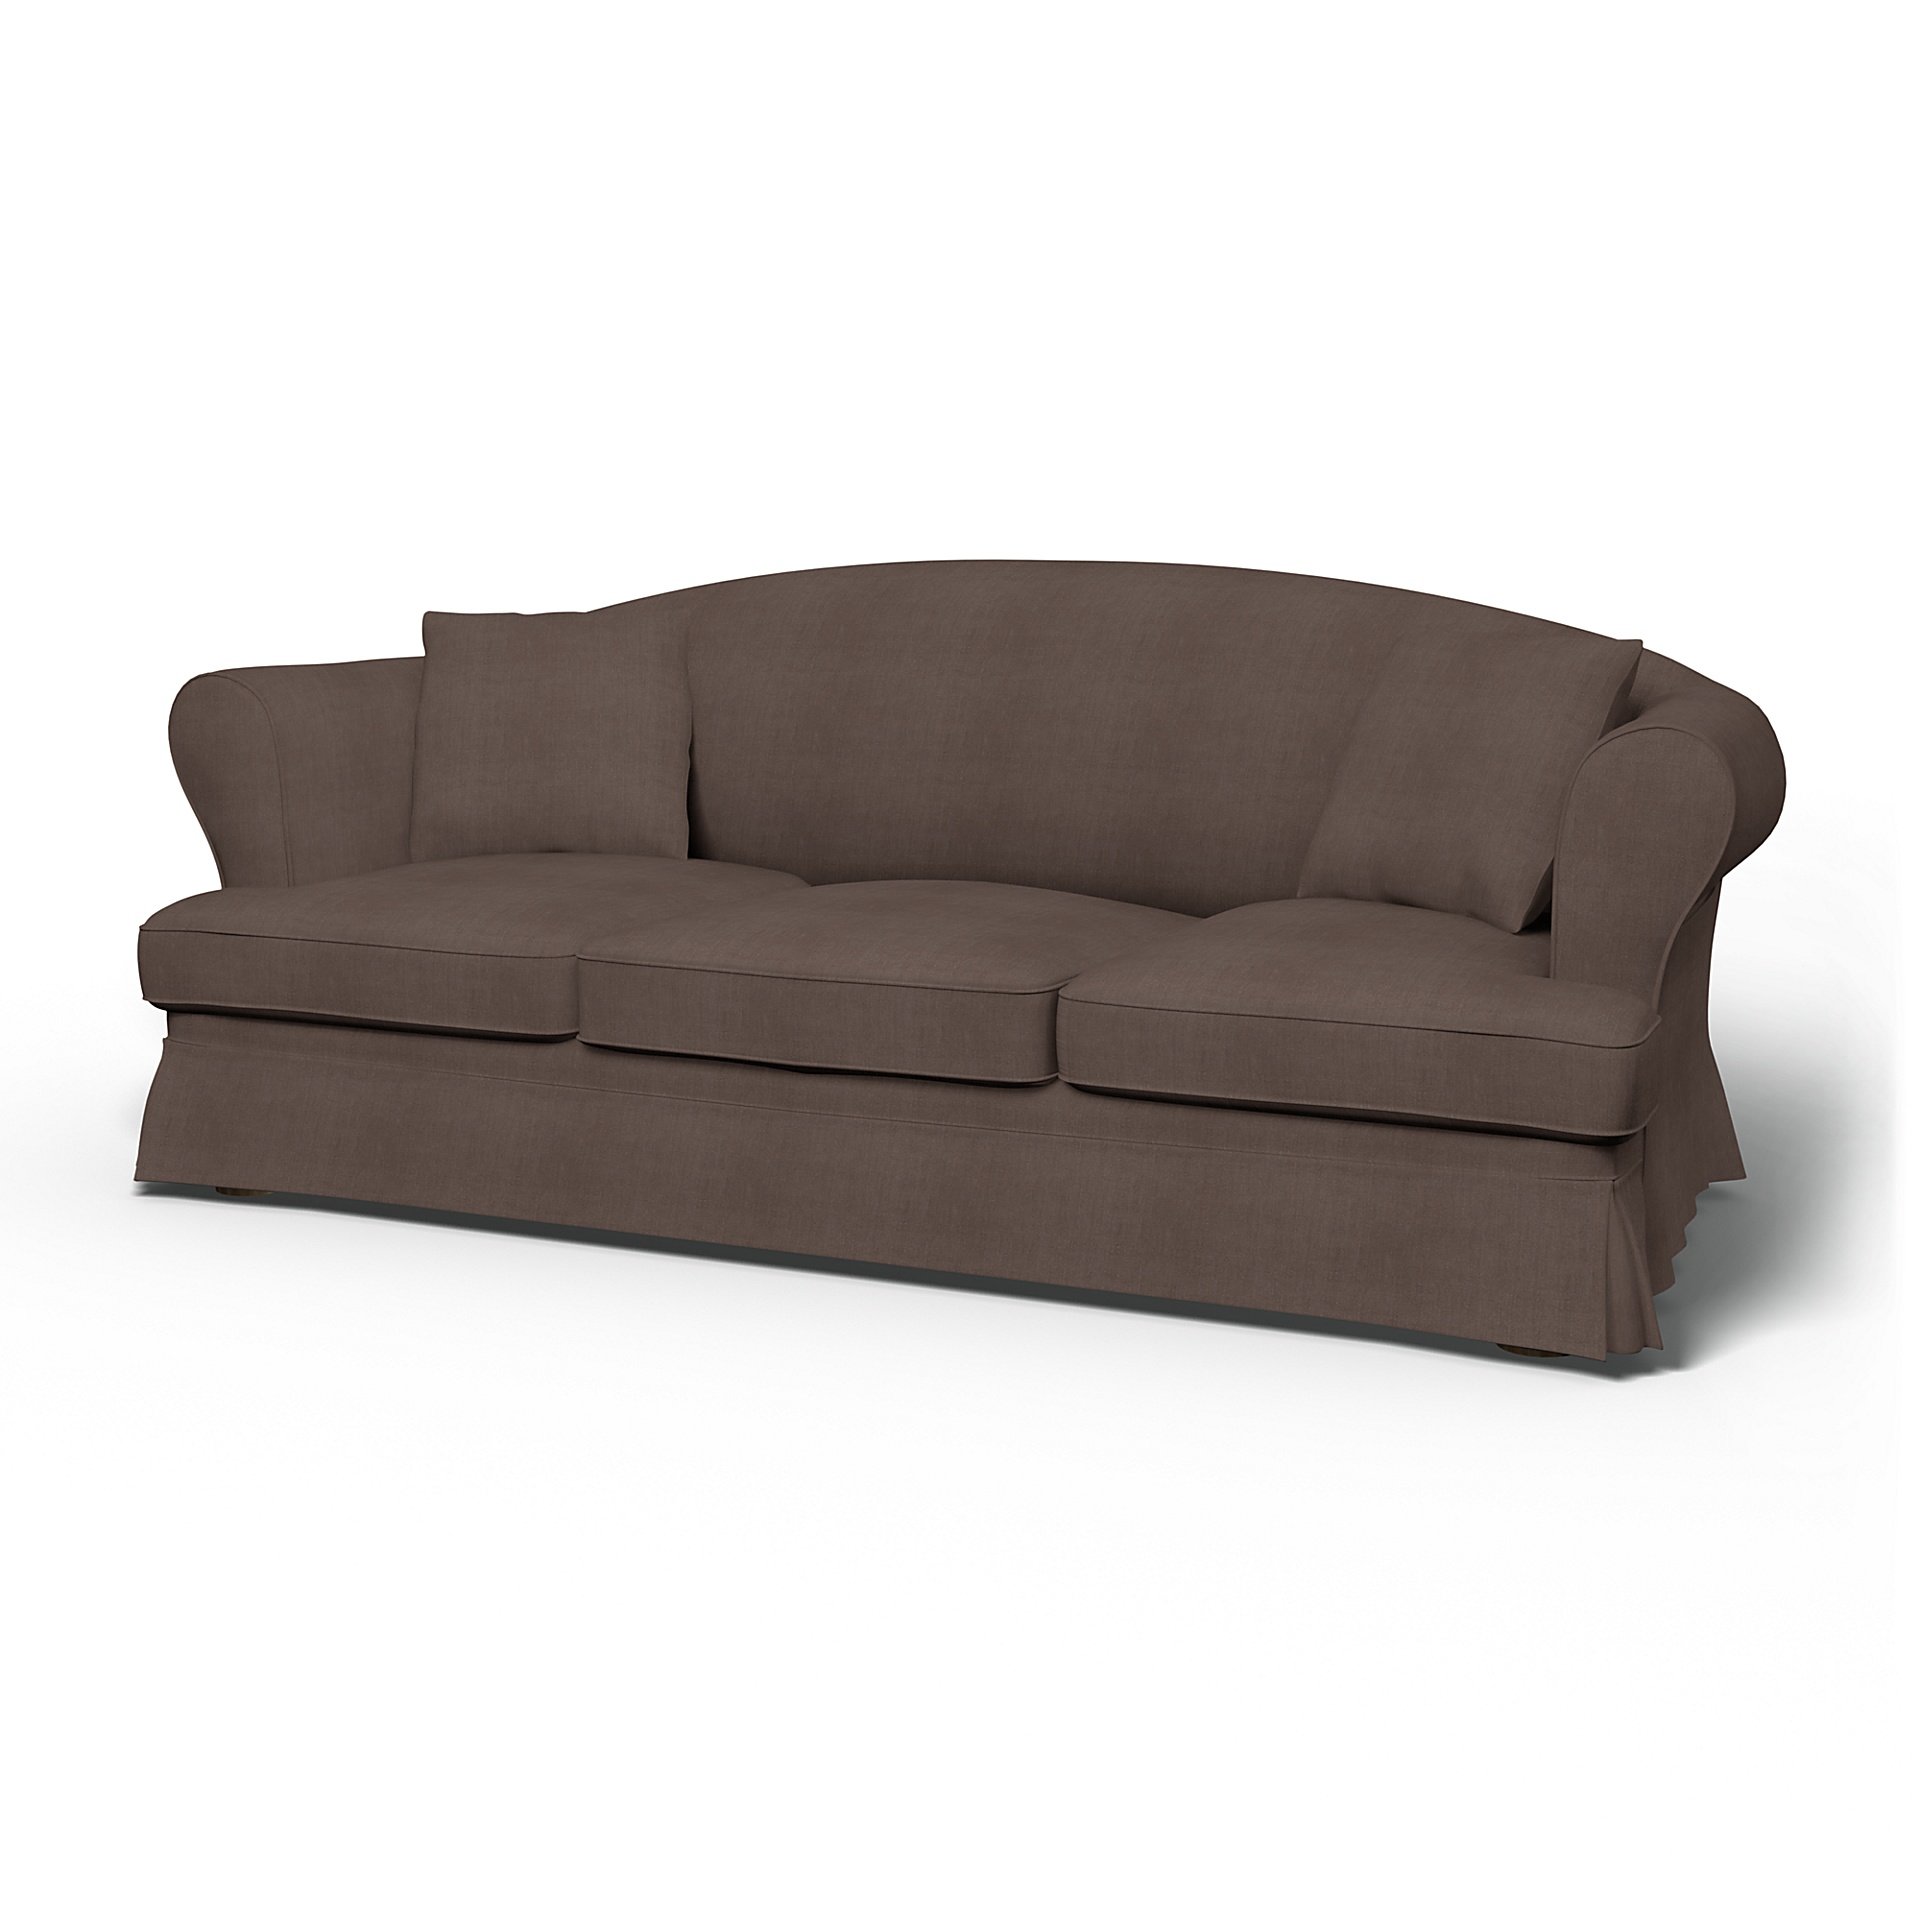 IKEA - Sundborn 3 Seater Sofa Cover, Cocoa, Linen - Bemz